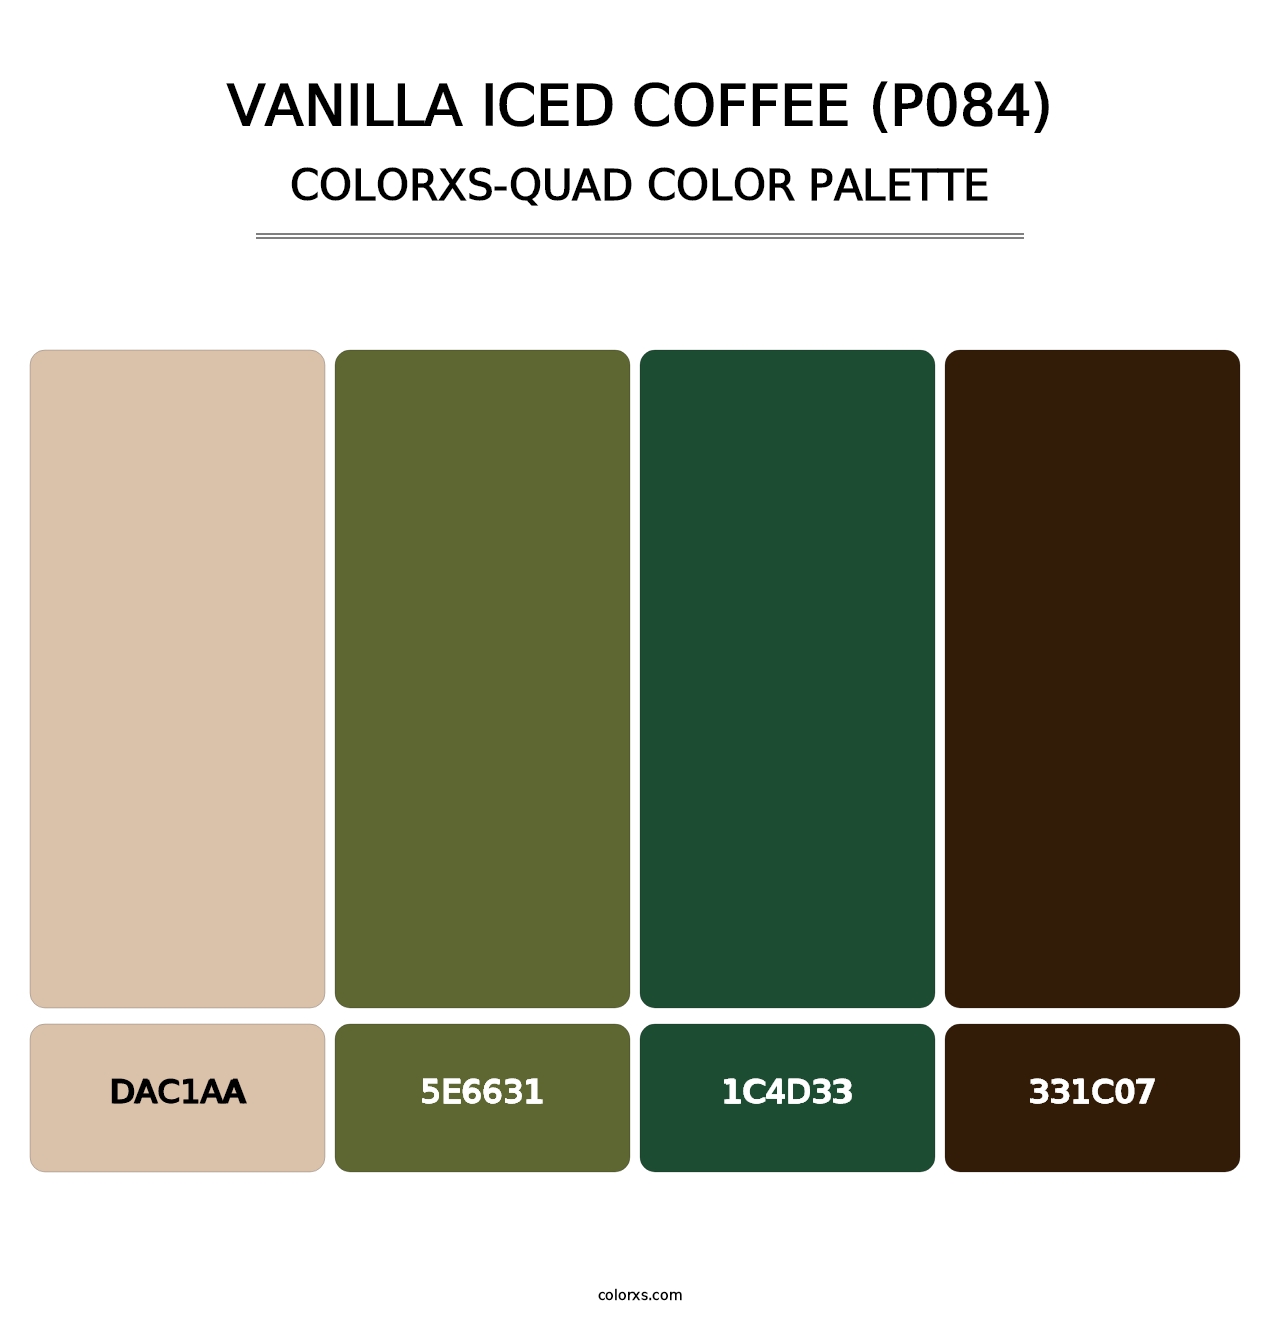 Vanilla Iced Coffee (P084) - Colorxs Quad Palette